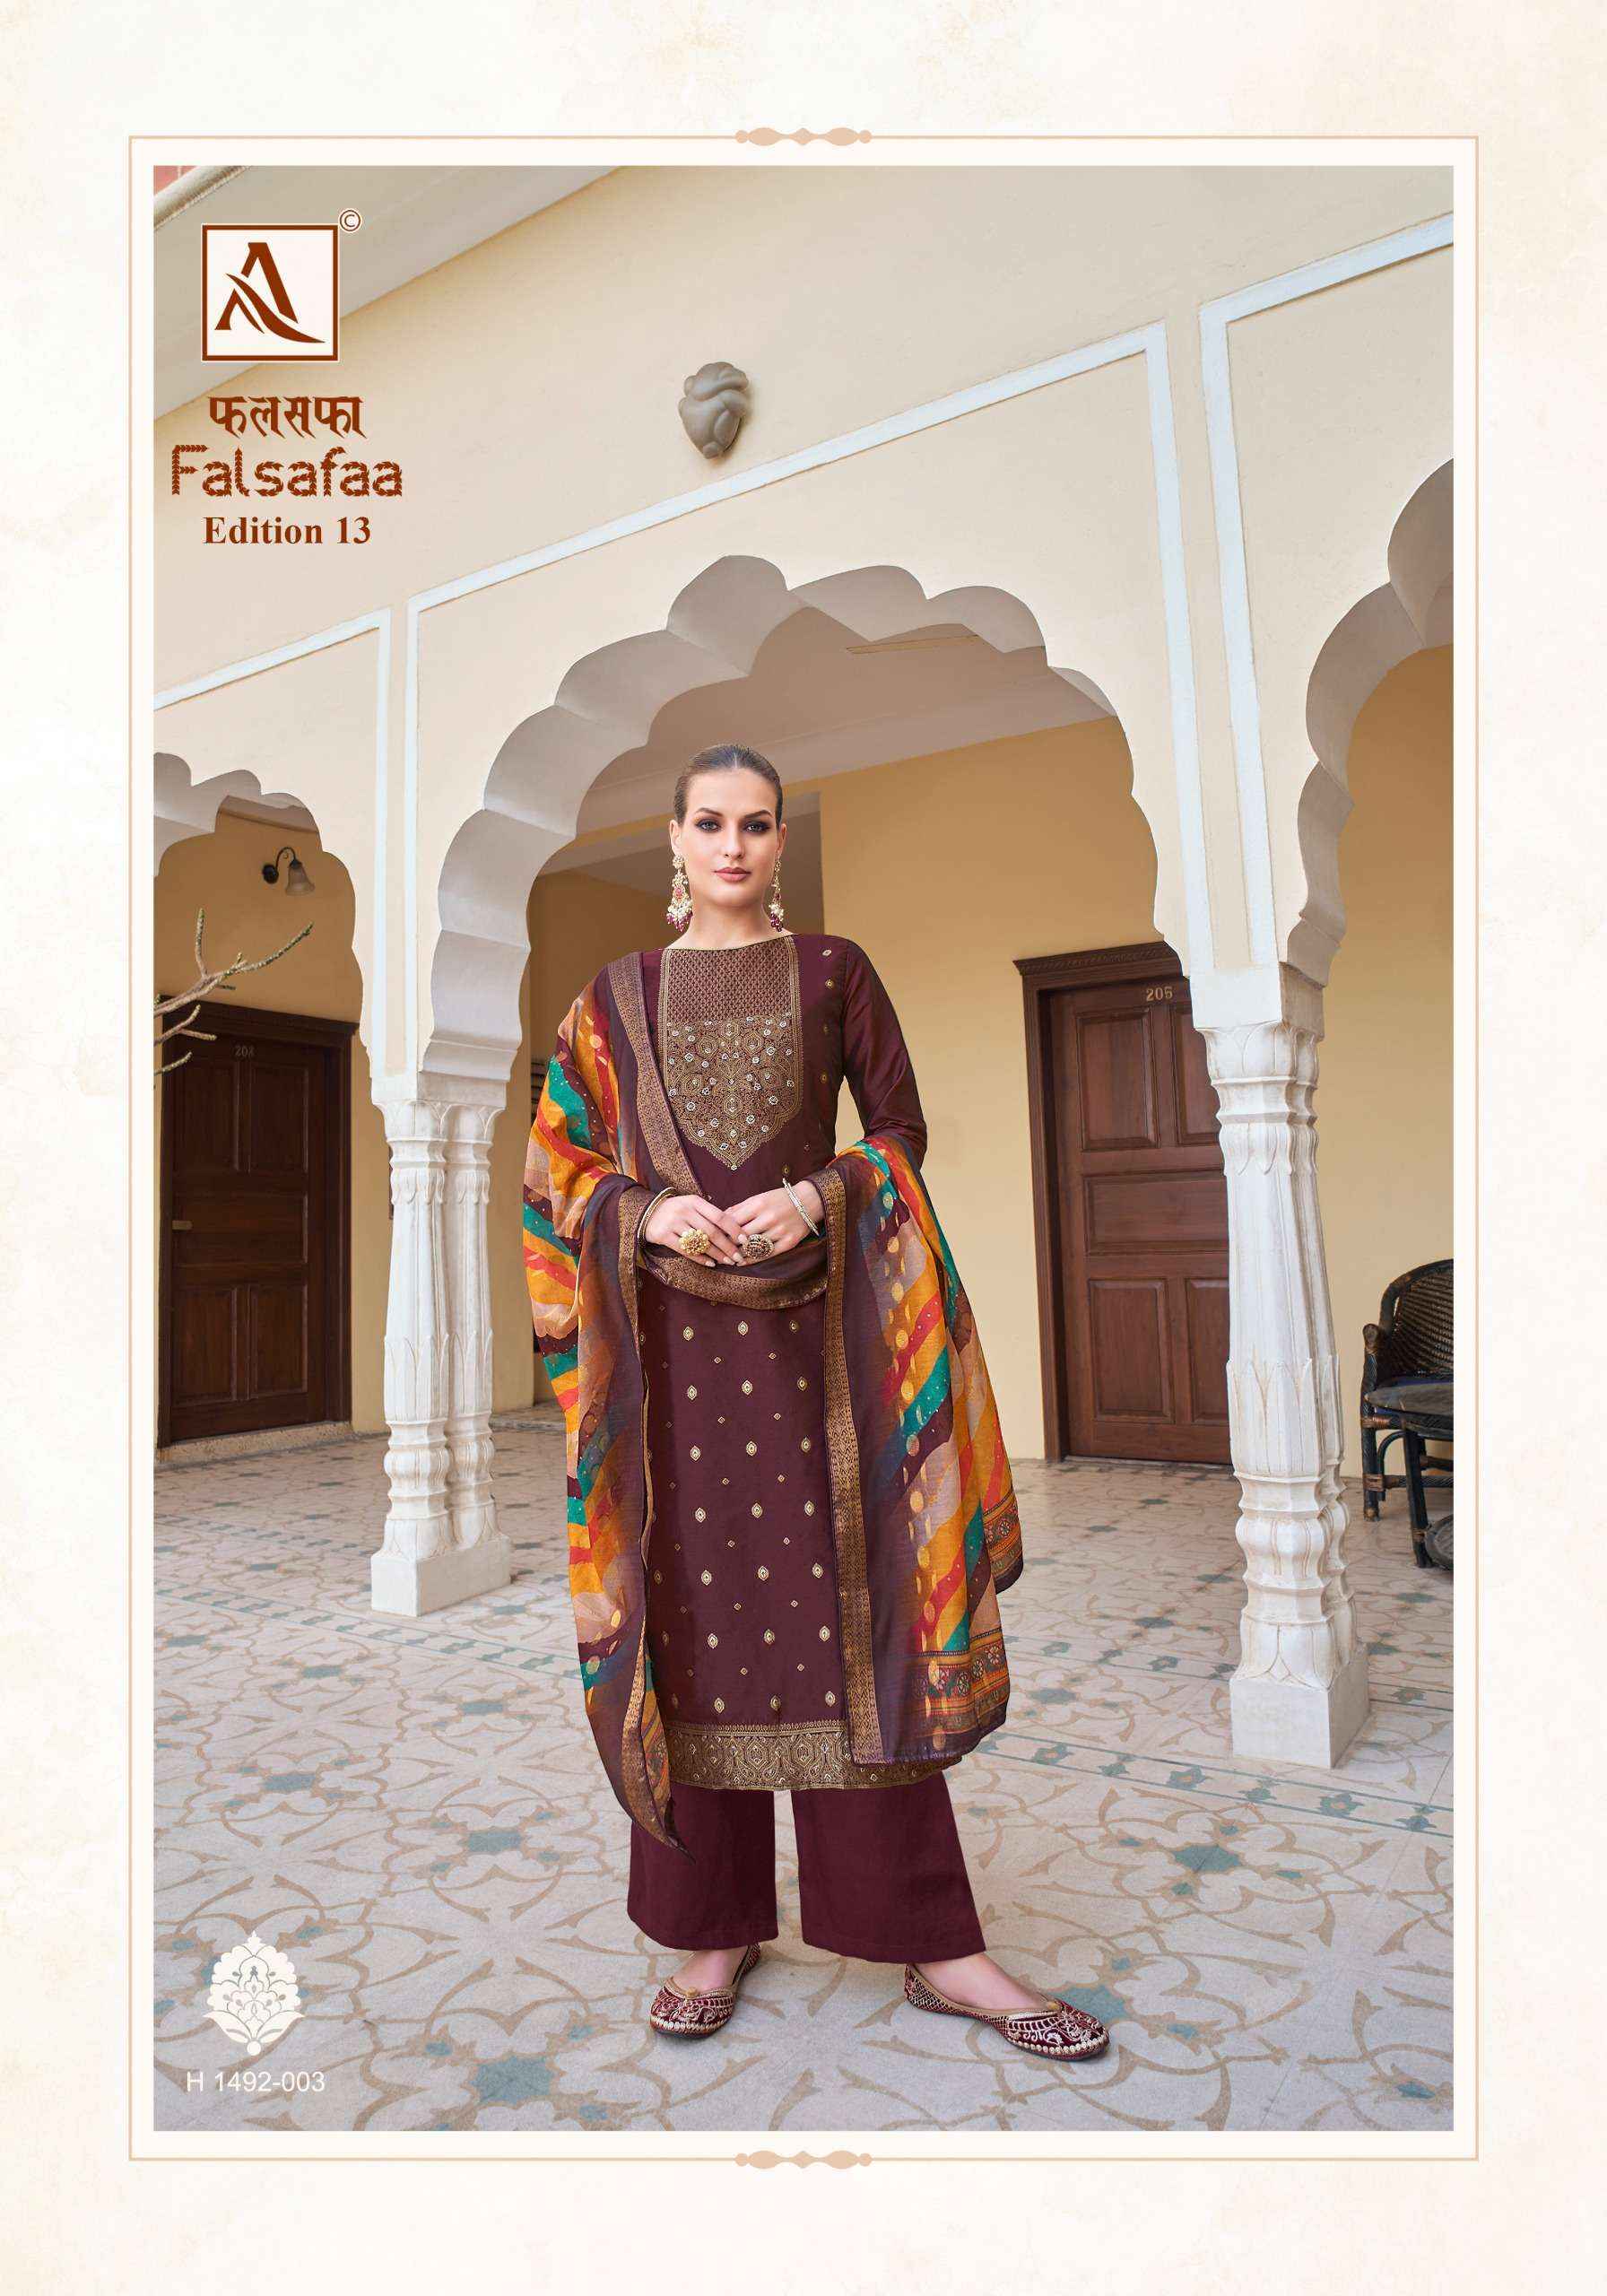 Alok Falsafaa Edition 13 Dola Jacquard Dress Material 6 pcs Catalogue